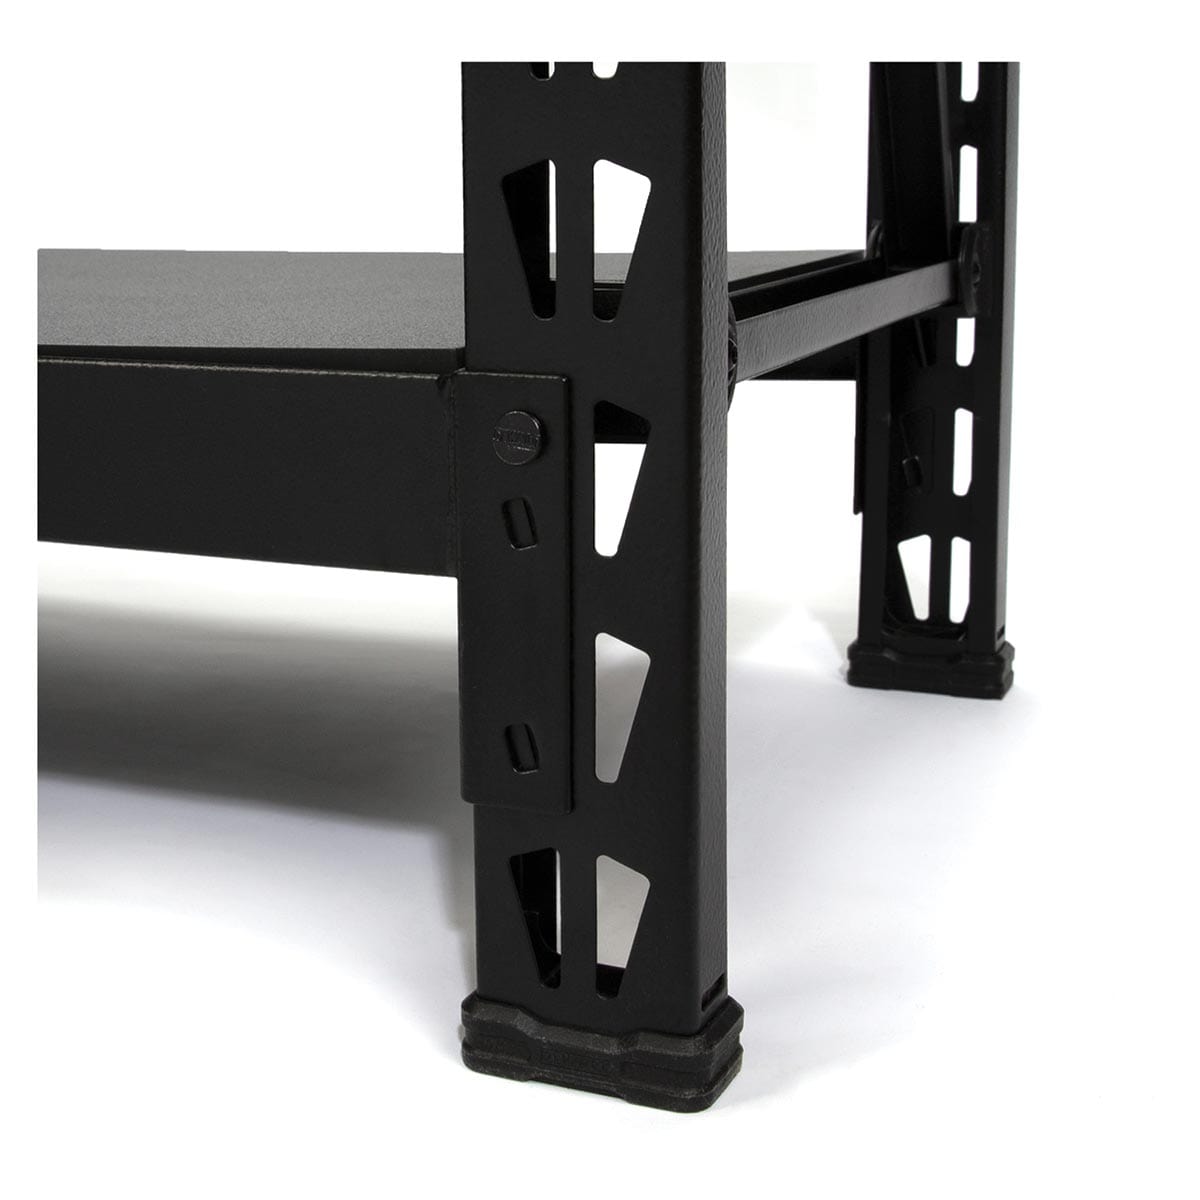 DEWALT 4-Foot Tall Black Frame 3 Shelf Industrial Storage Rack